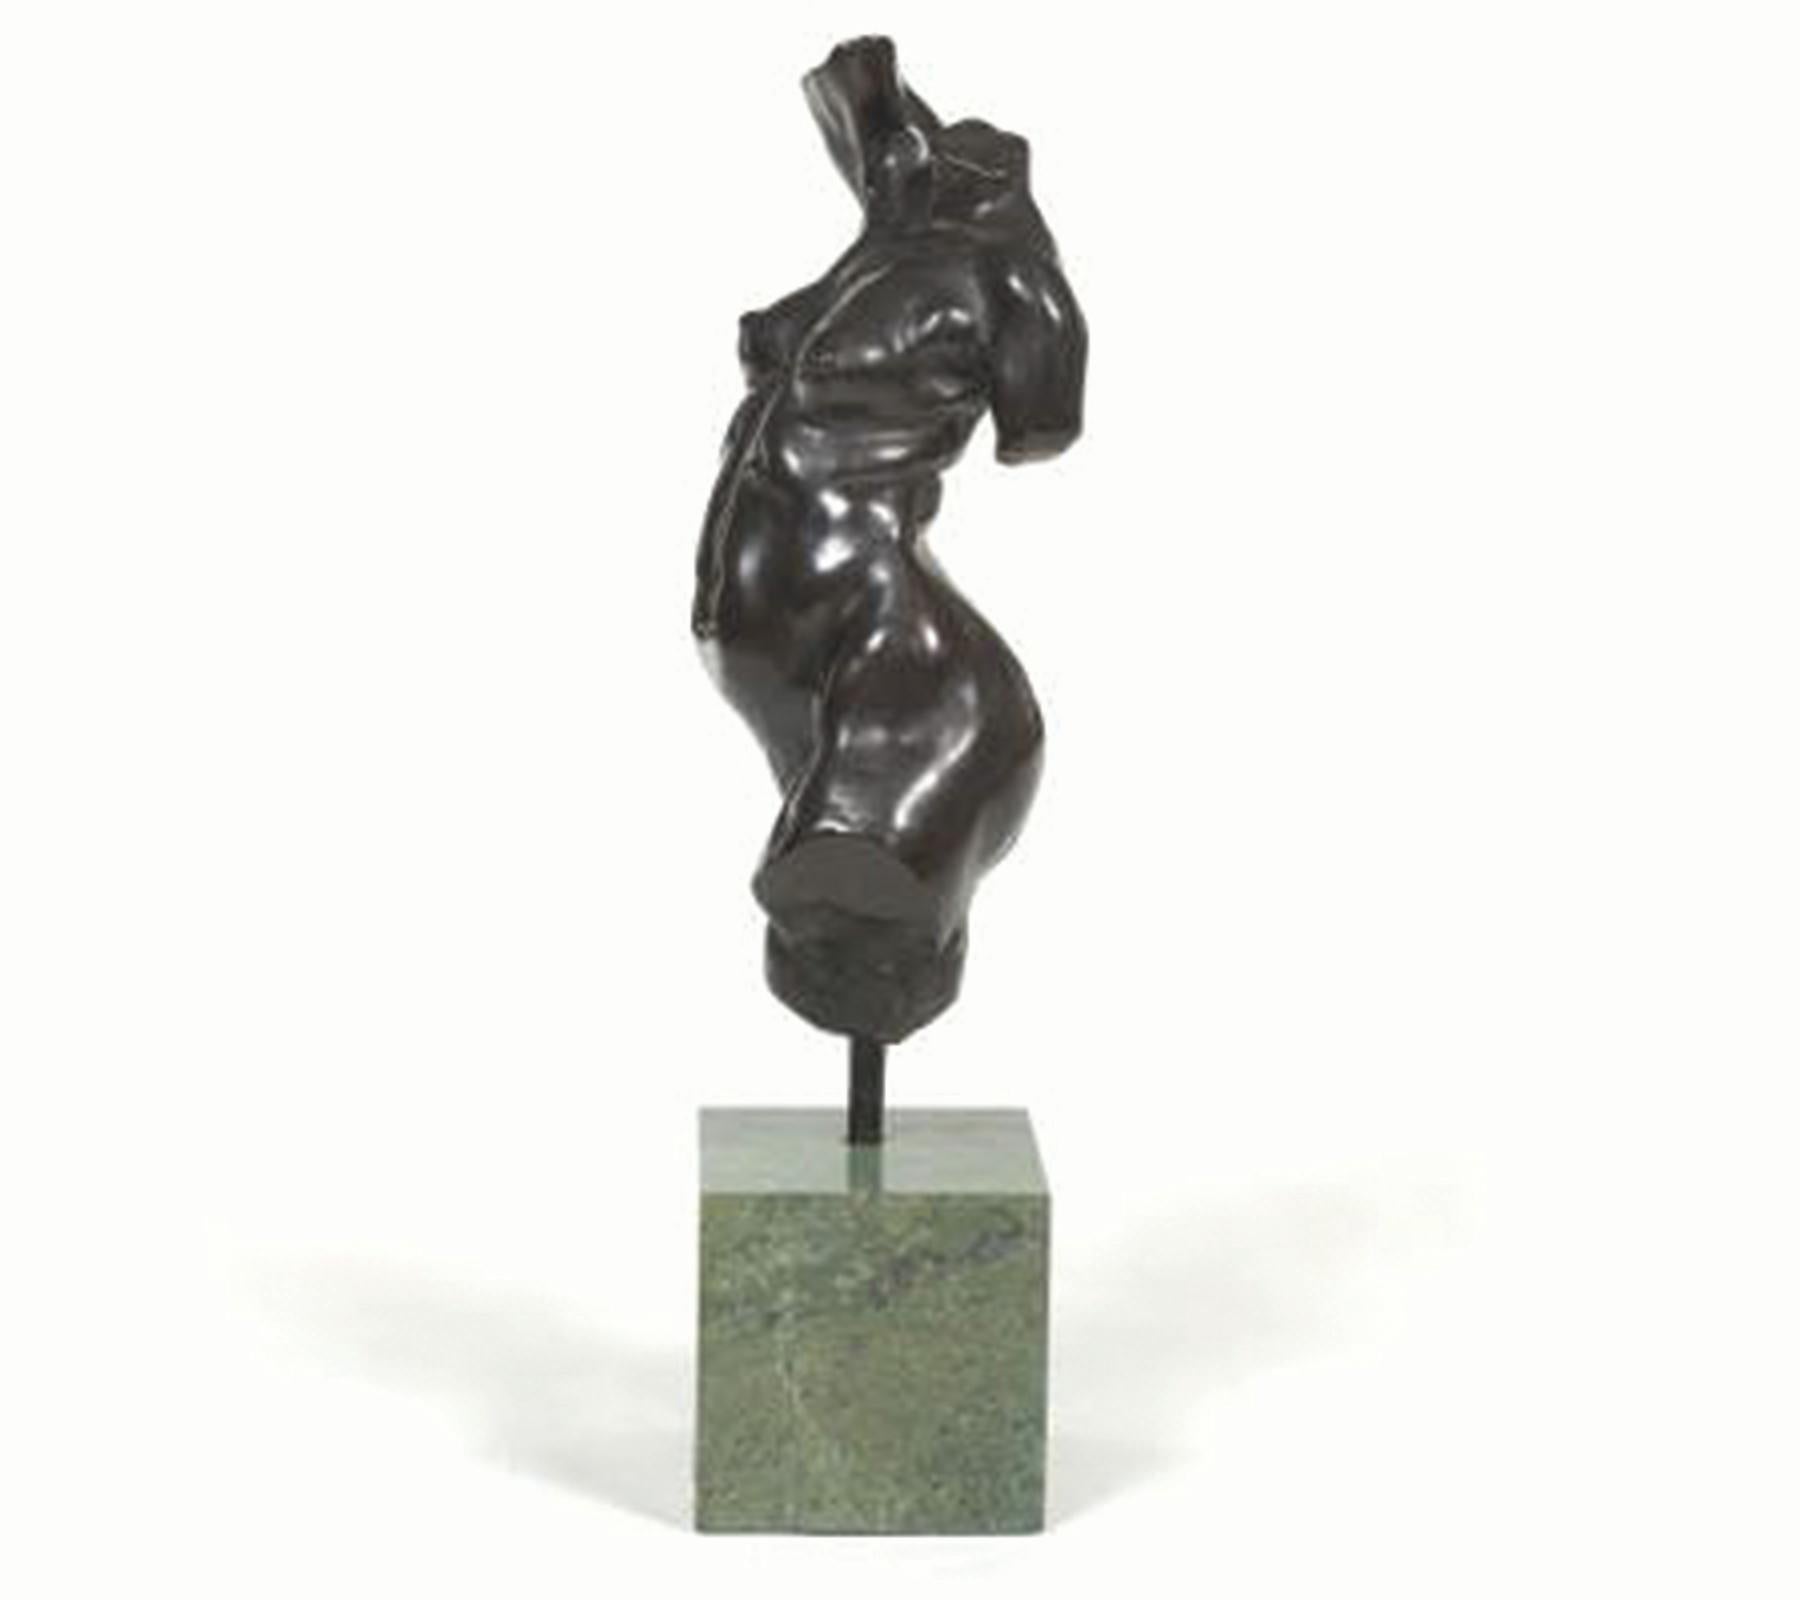 Nude Female Torso Bronze Sculpture, 20th Century Contemporary American Artist For Sale 1